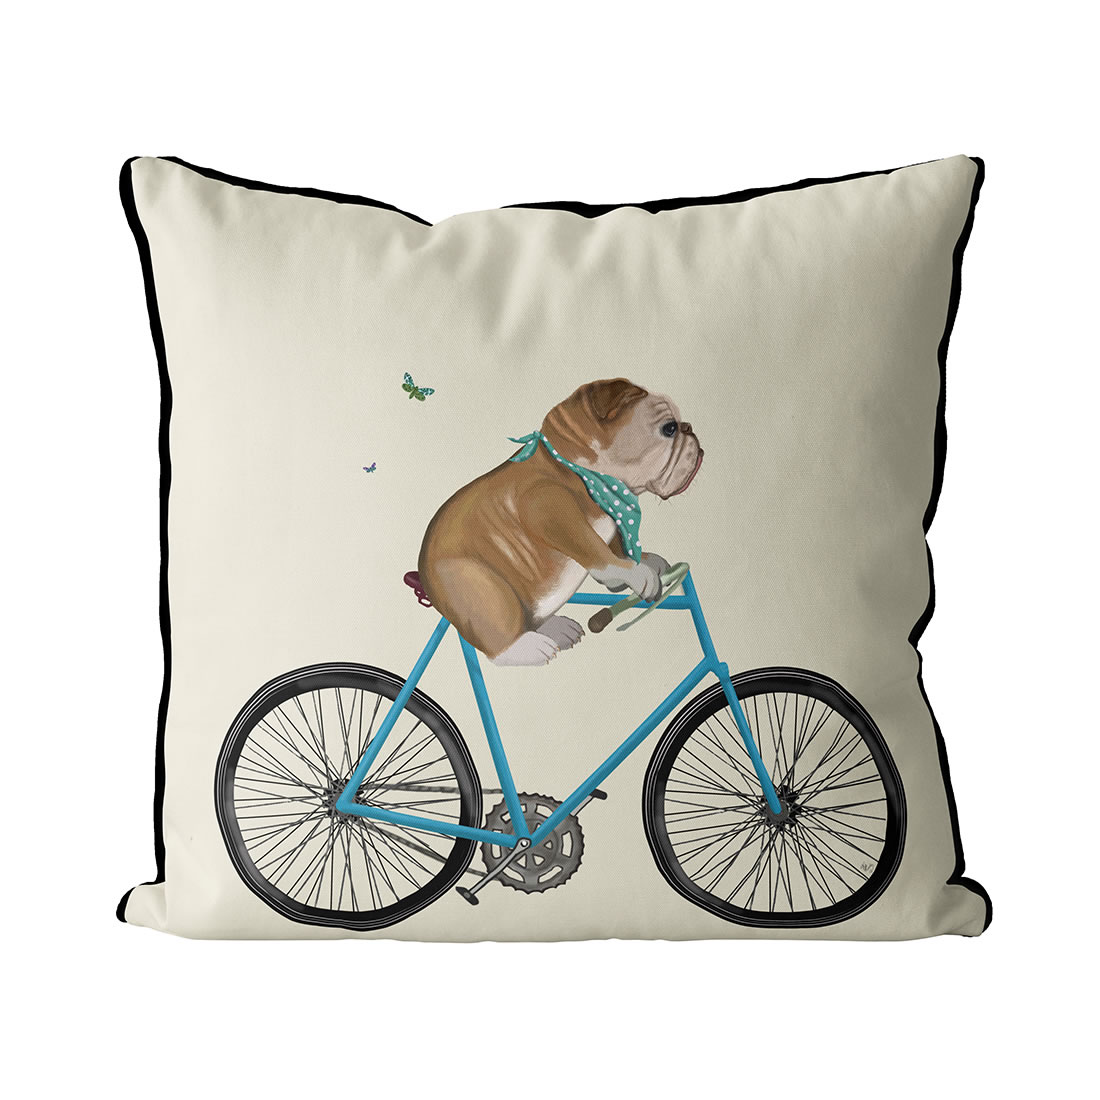 English bulldog on bicycle cream color